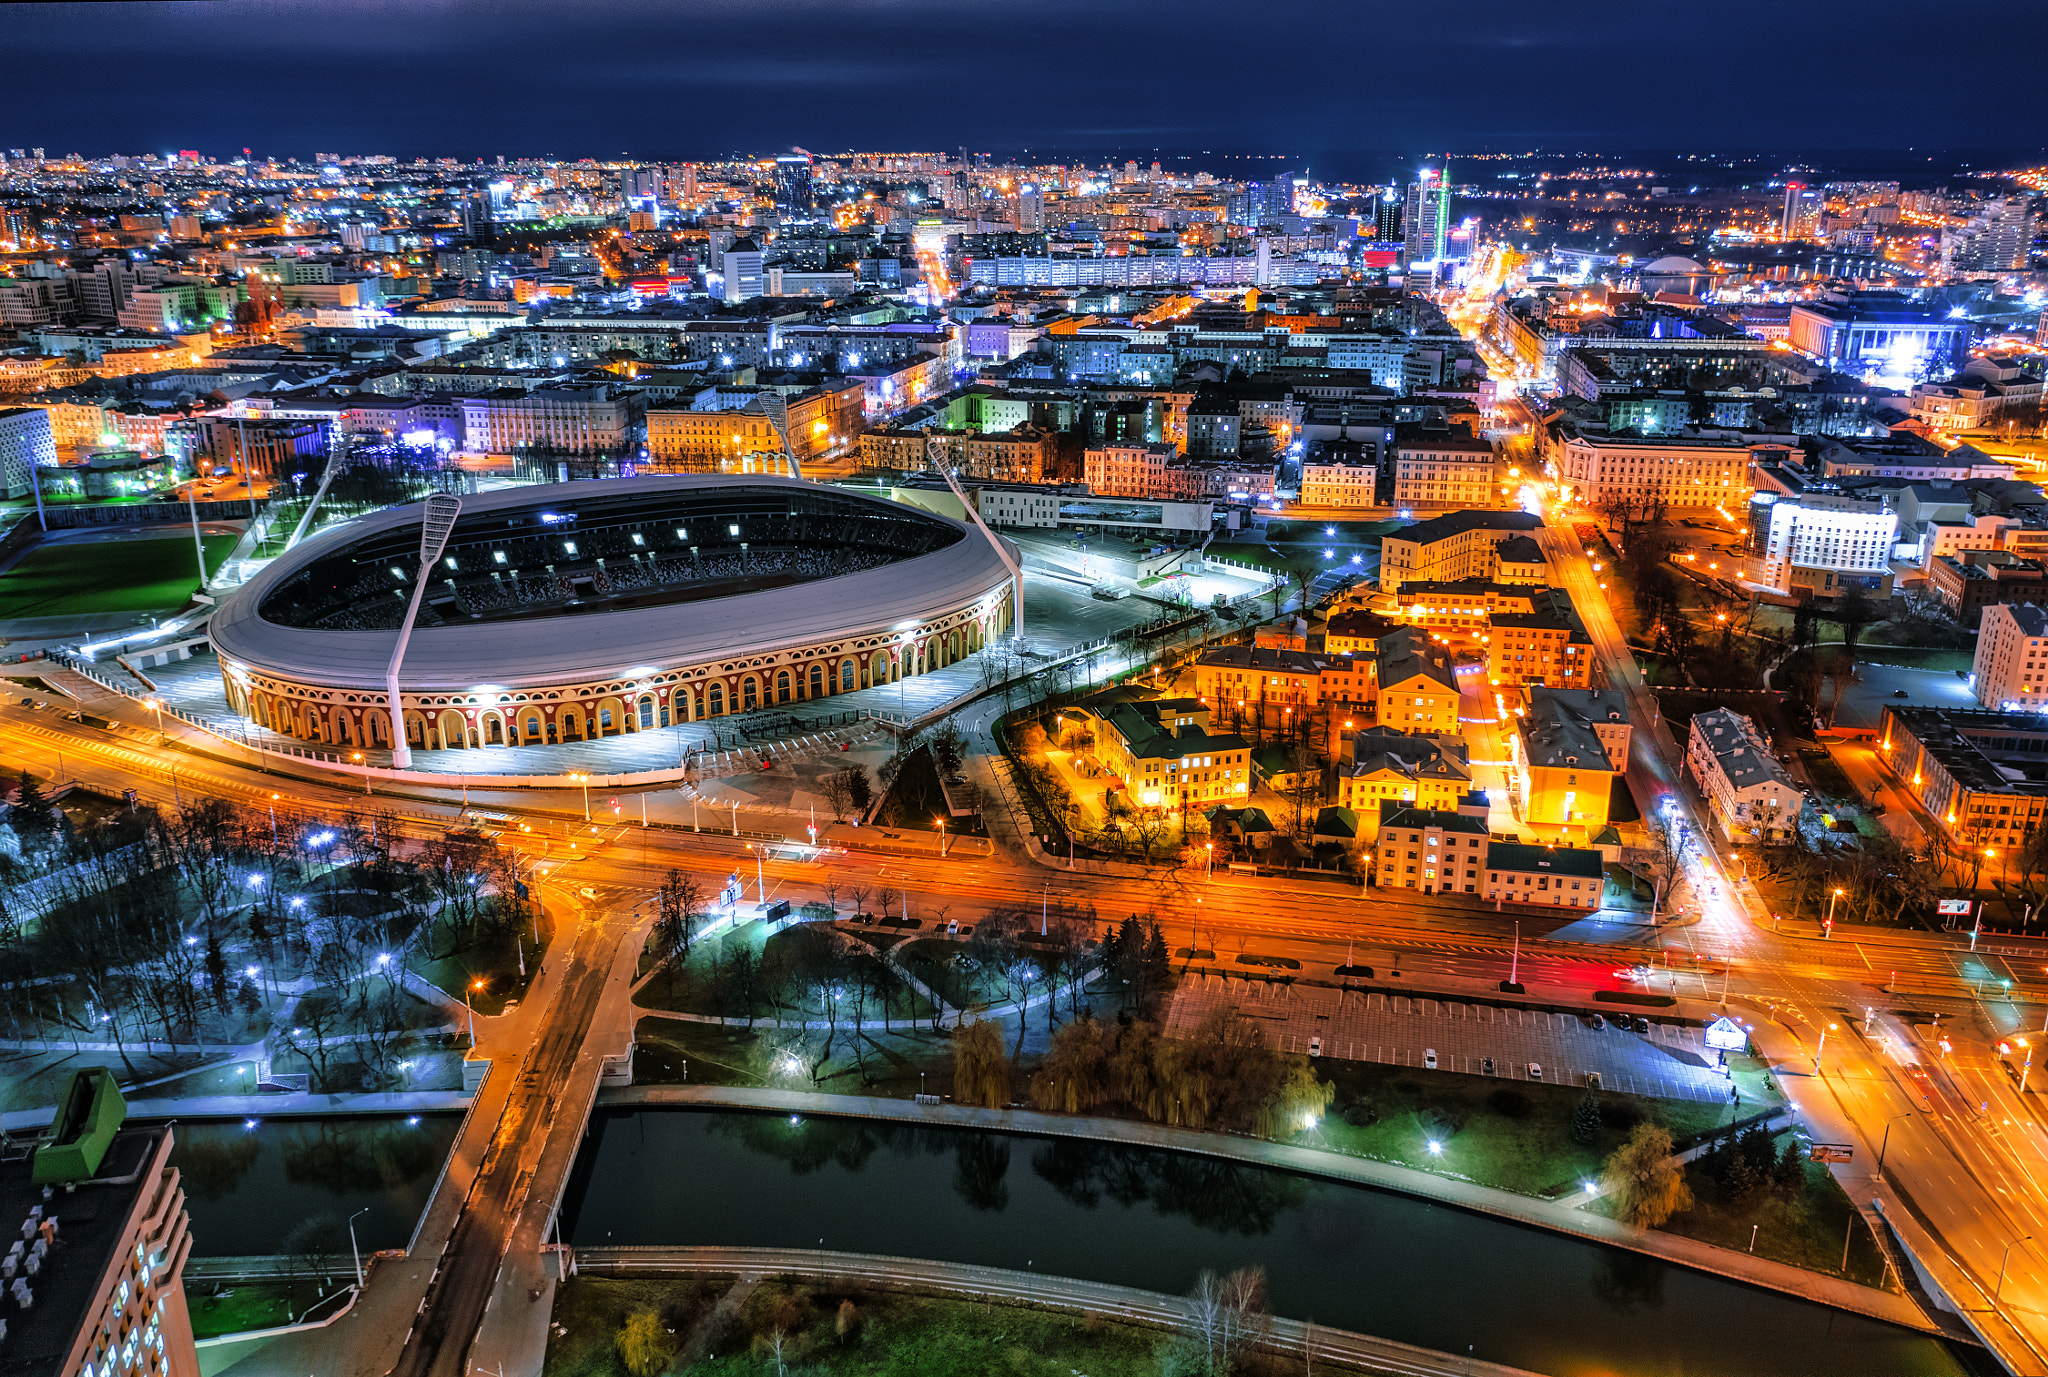 A night aerial view on Stadium Dinamo in Minsk, Belarus